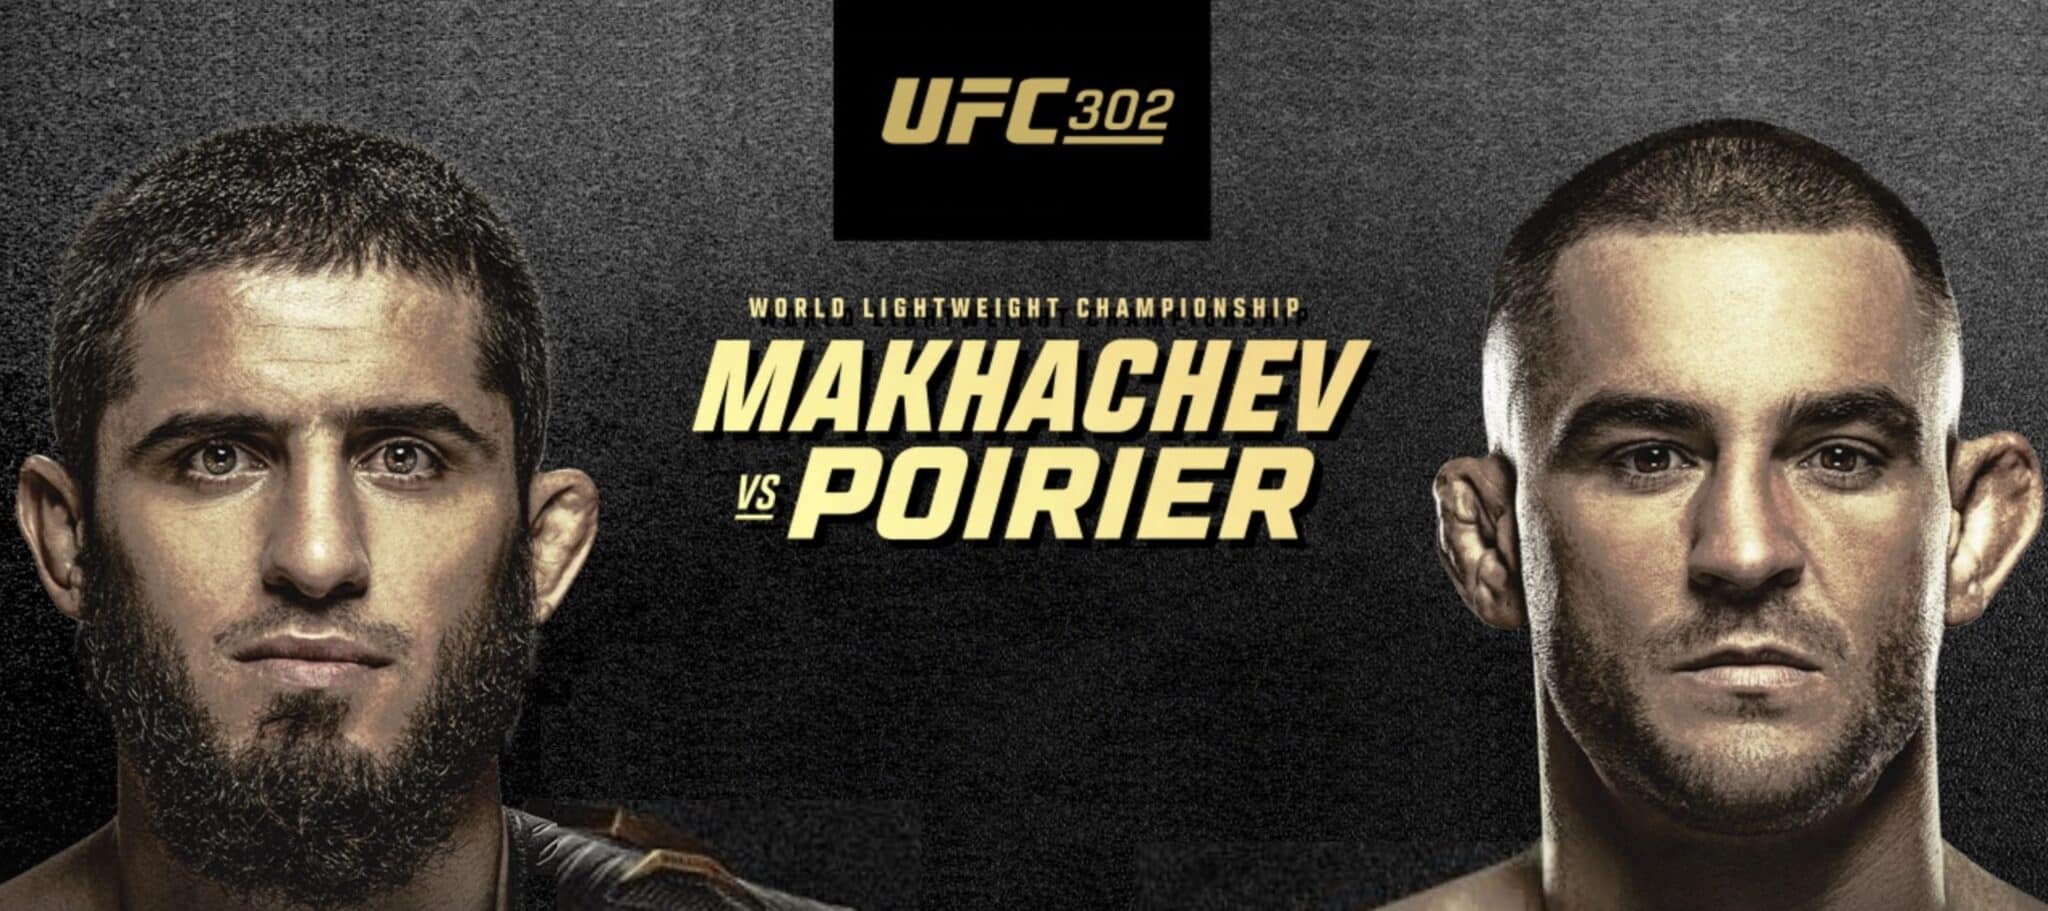 Makhachev vs Poirier